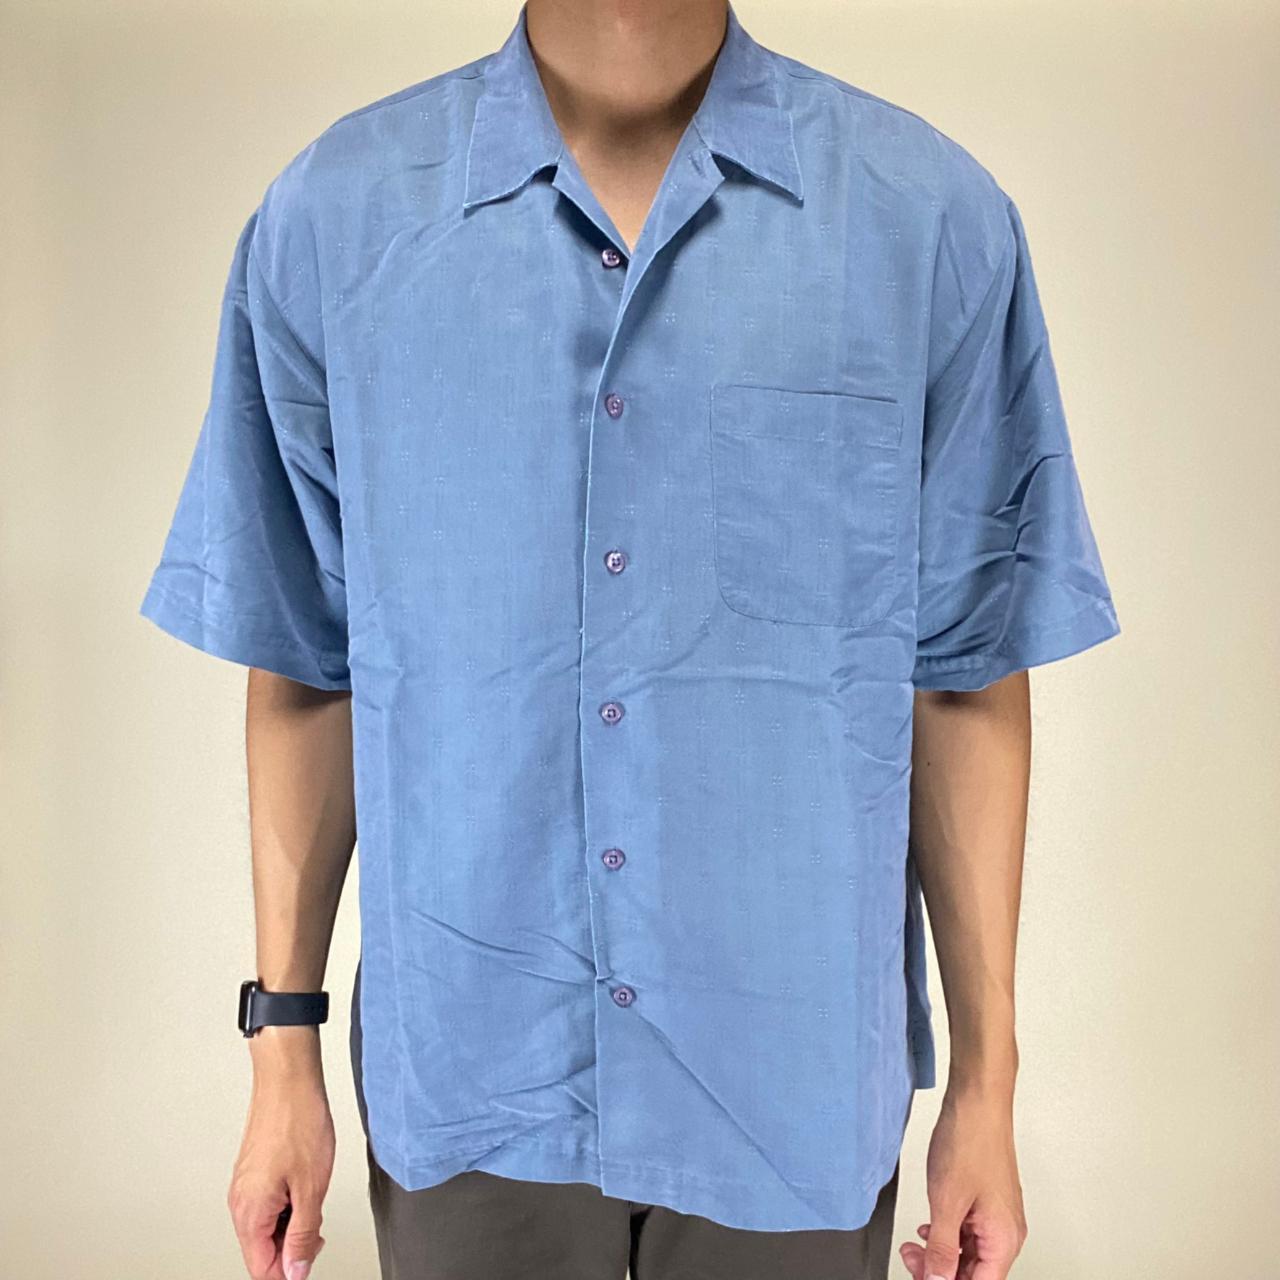 Vintage 2000's Haggar Camp Collar Shirt Length:... - Depop